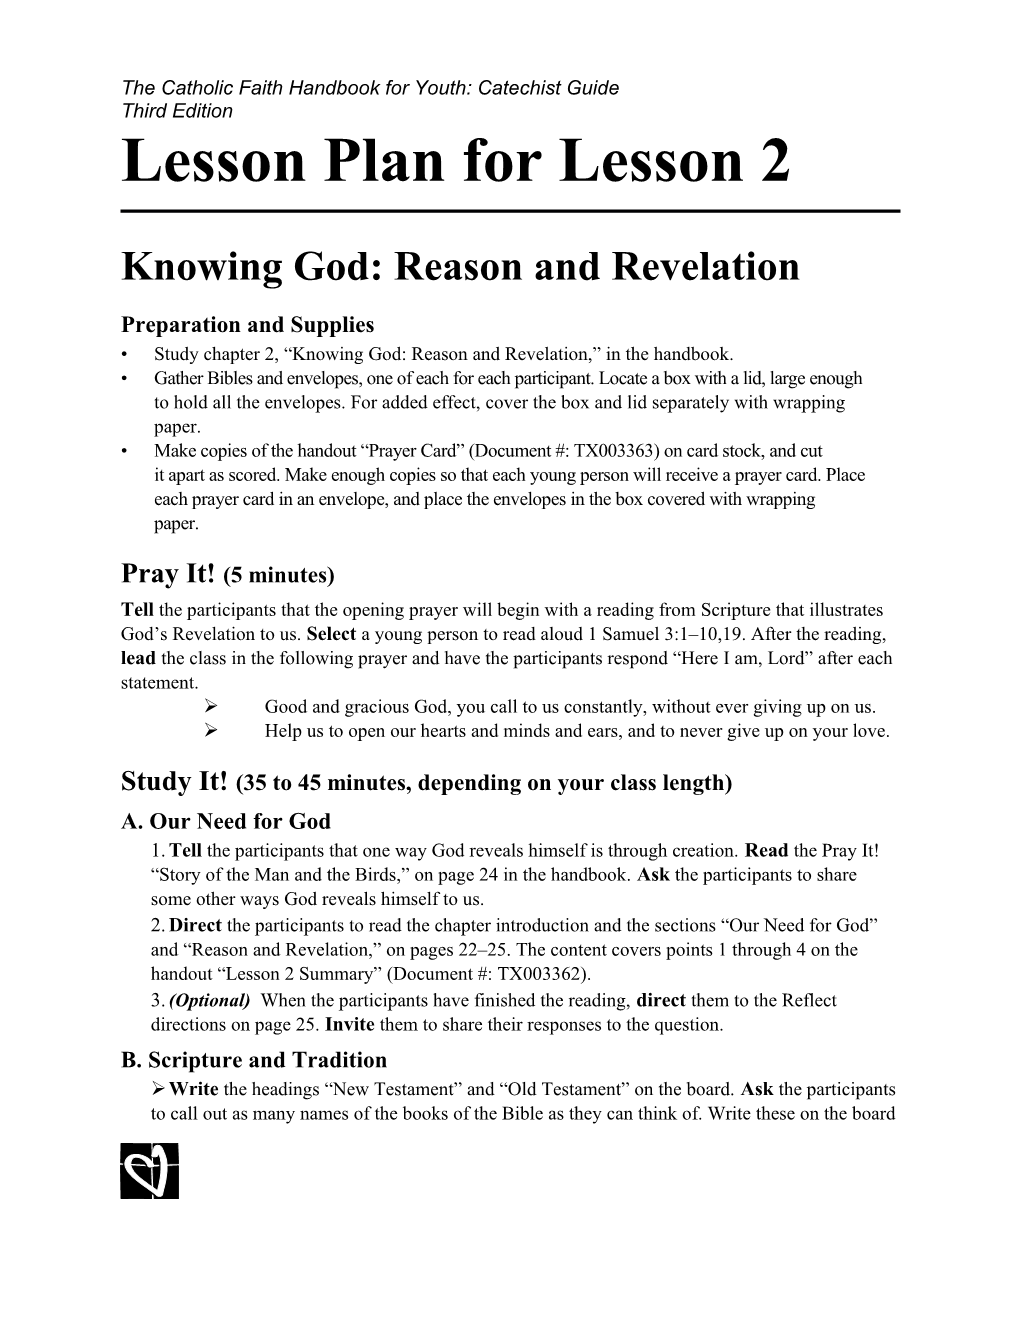 Lesson Plan for Lesson 2